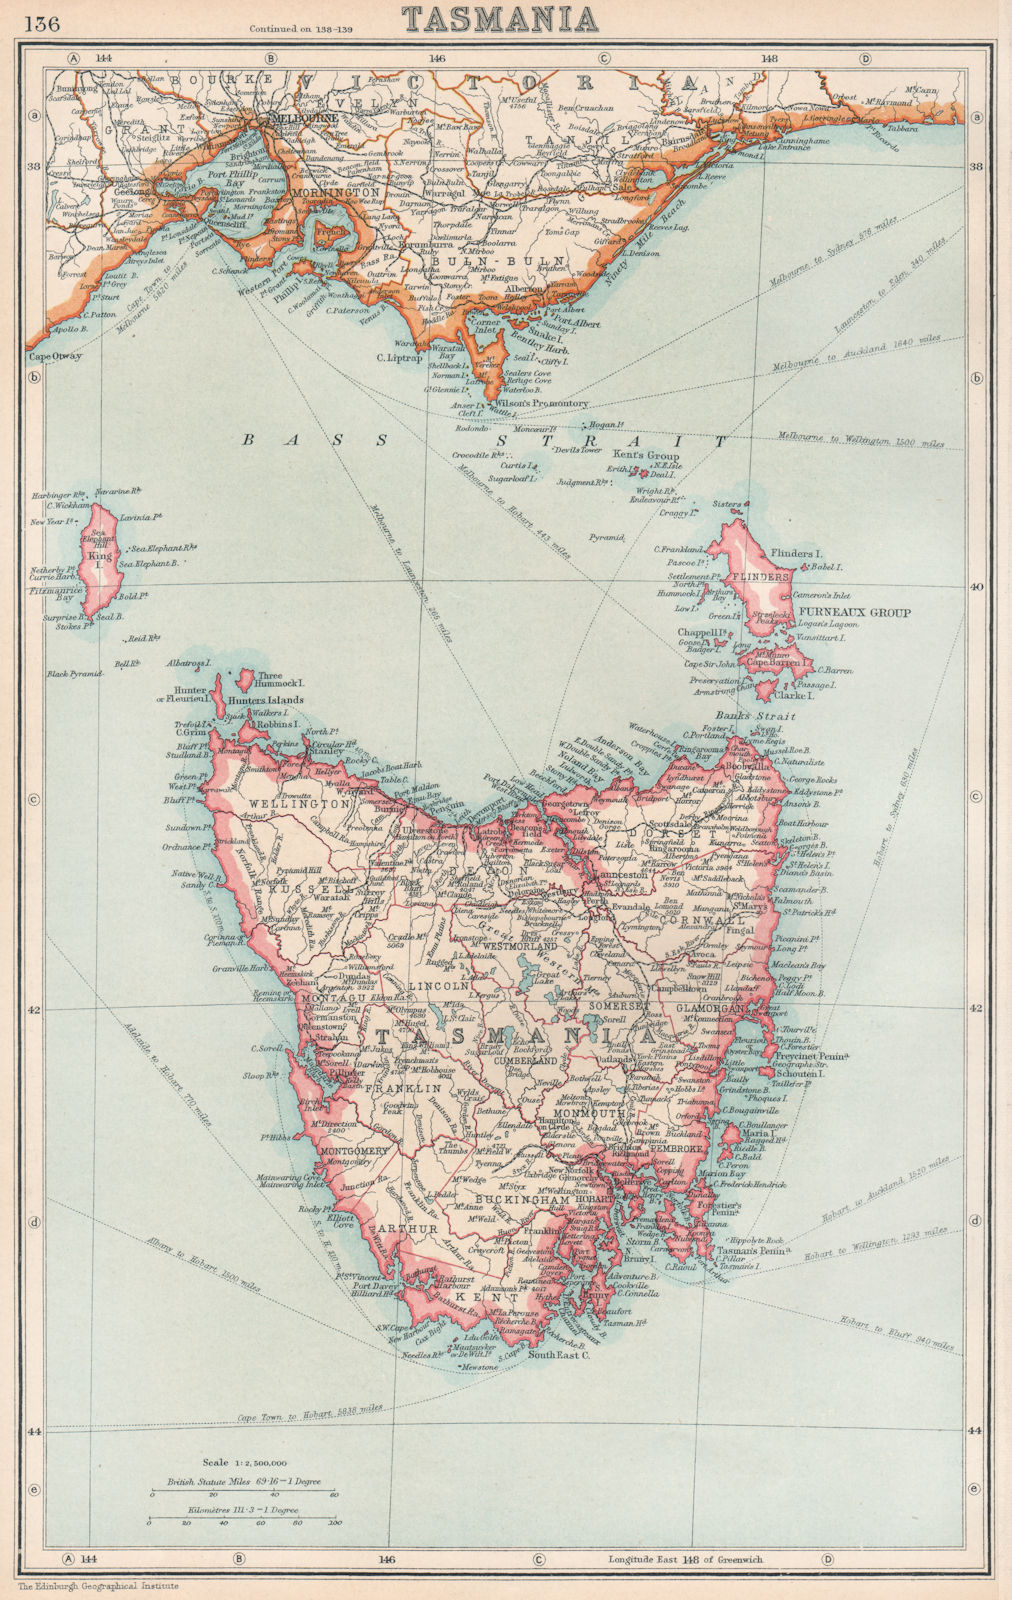 Associate Product TASMANIA. state map showing counties. Australia. BARTHOLOMEW 1924 old